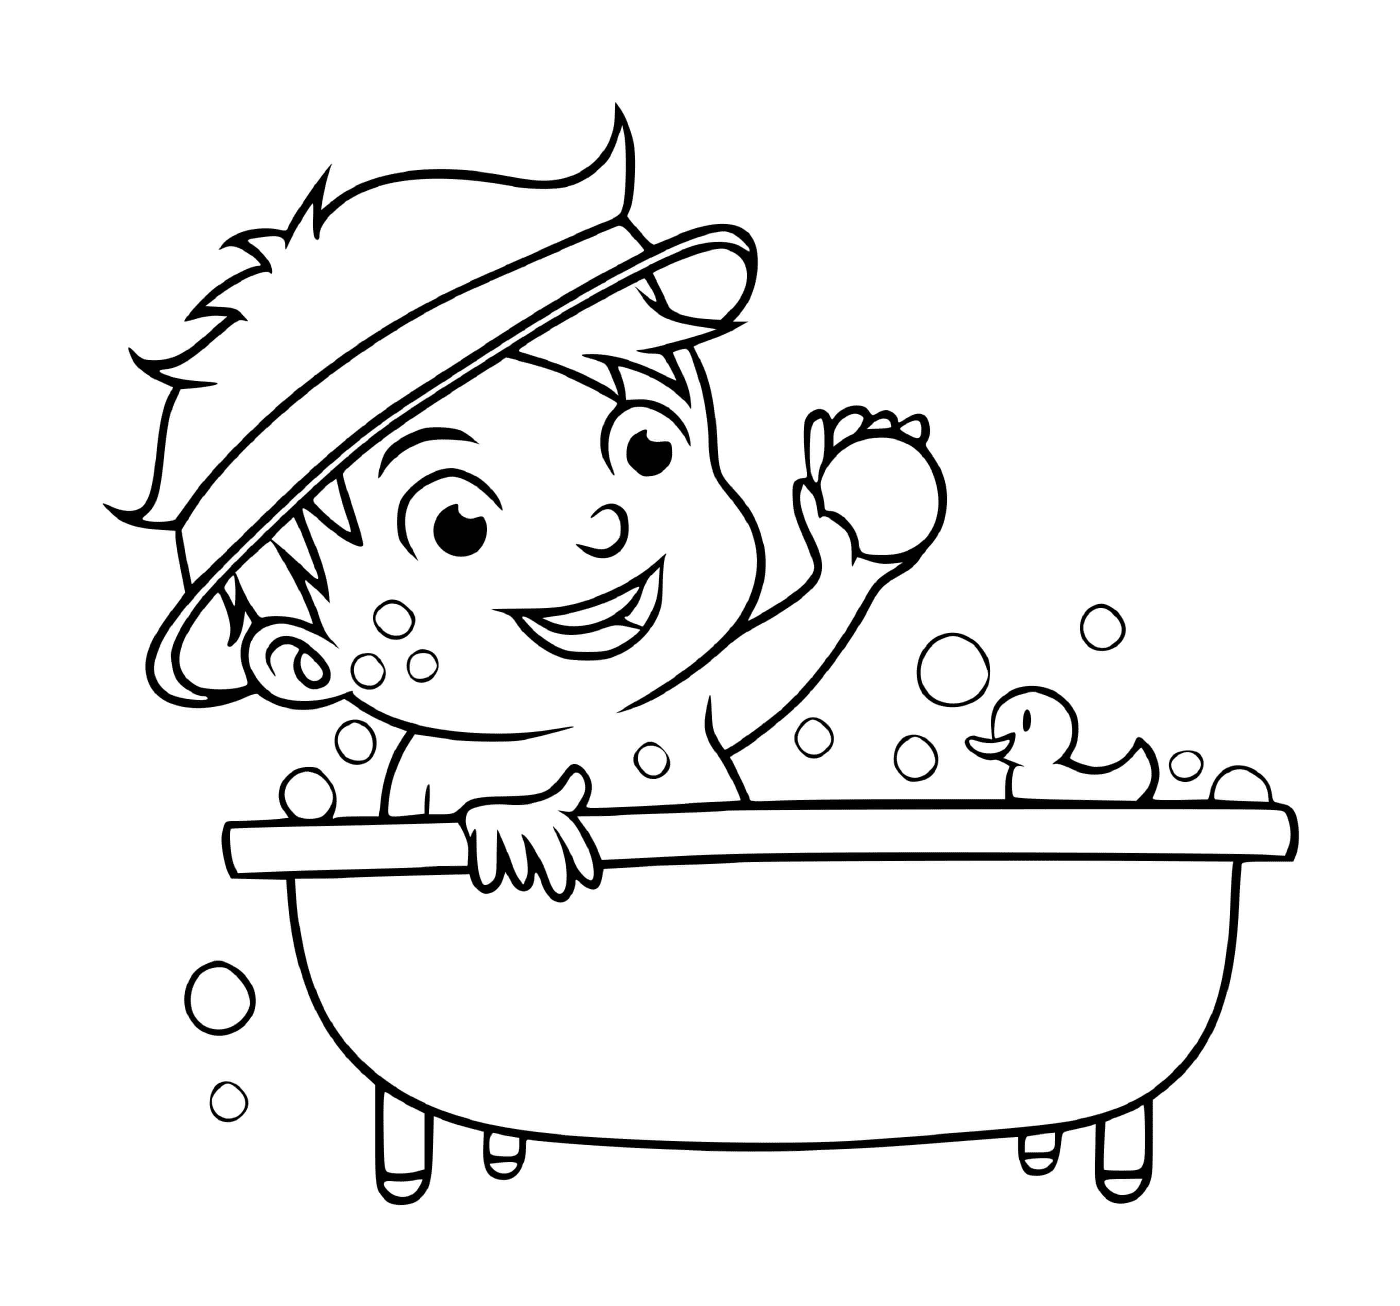  Un niño toma un baño para mantenerse limpio 